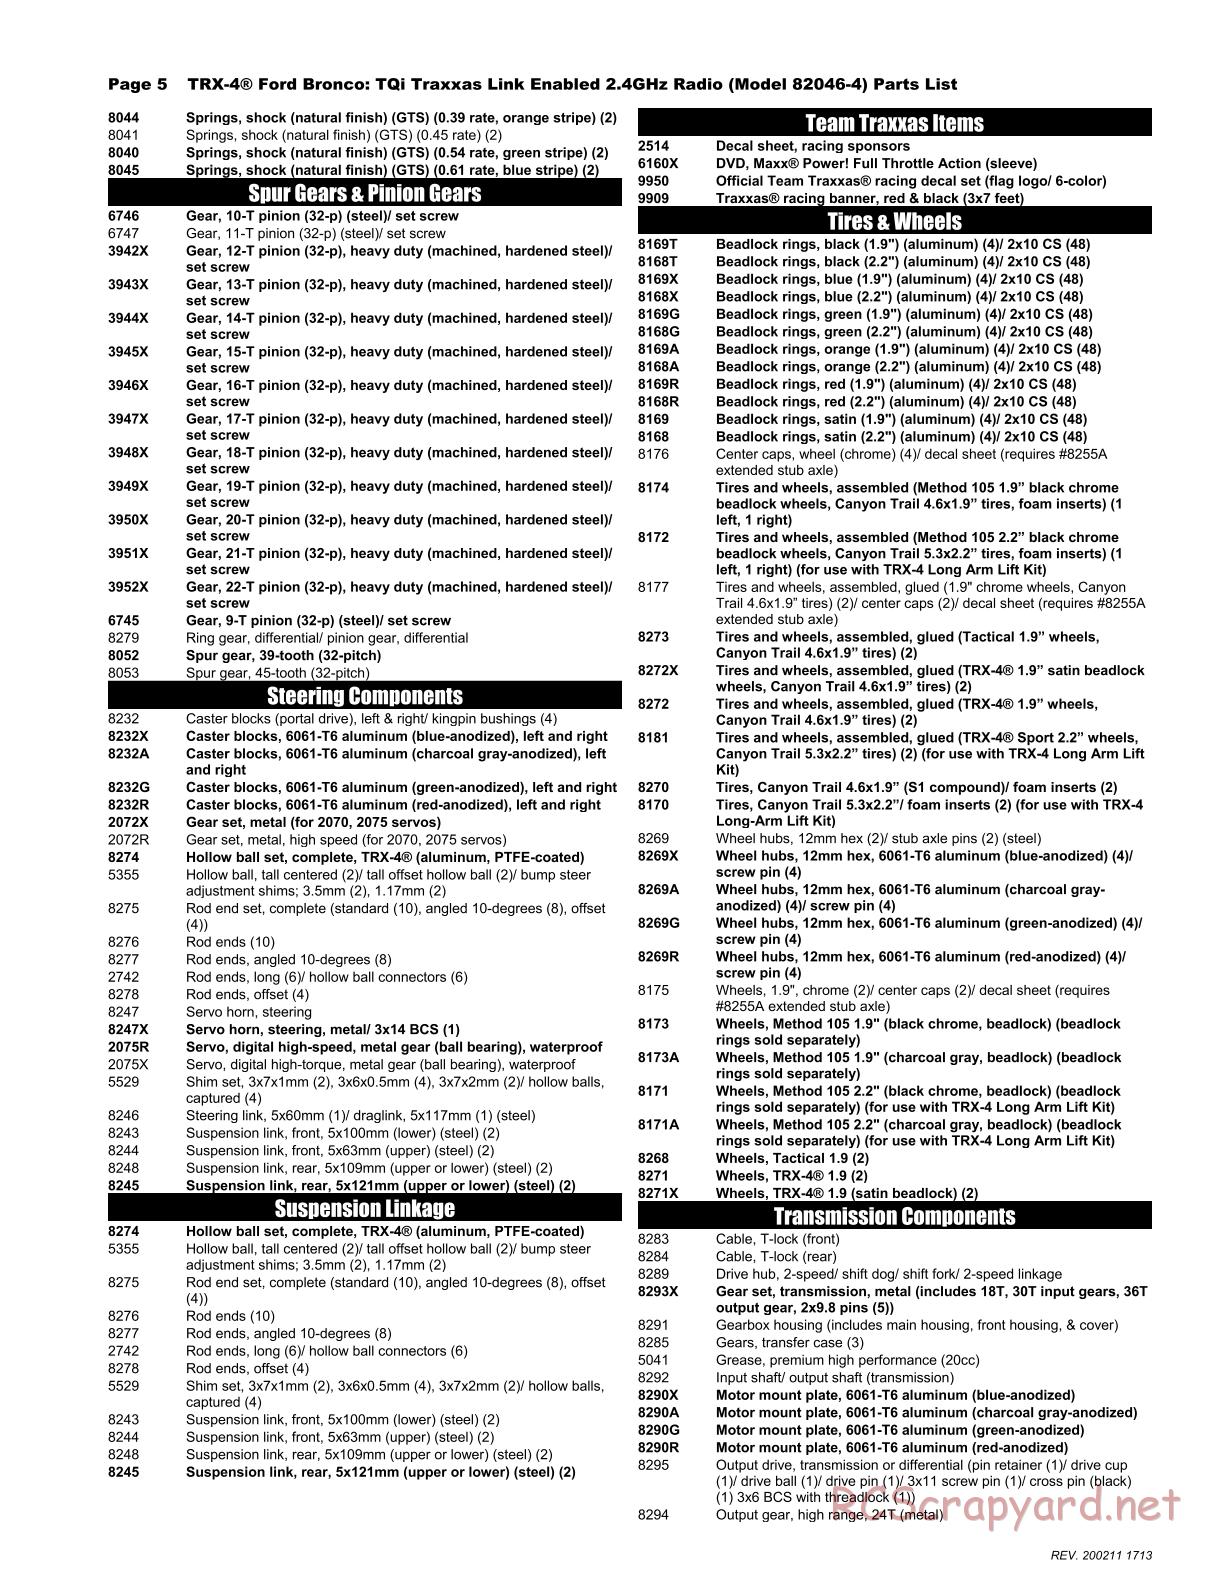 Traxxas - TRX-4 Ford Bronco - Parts List - Page 5